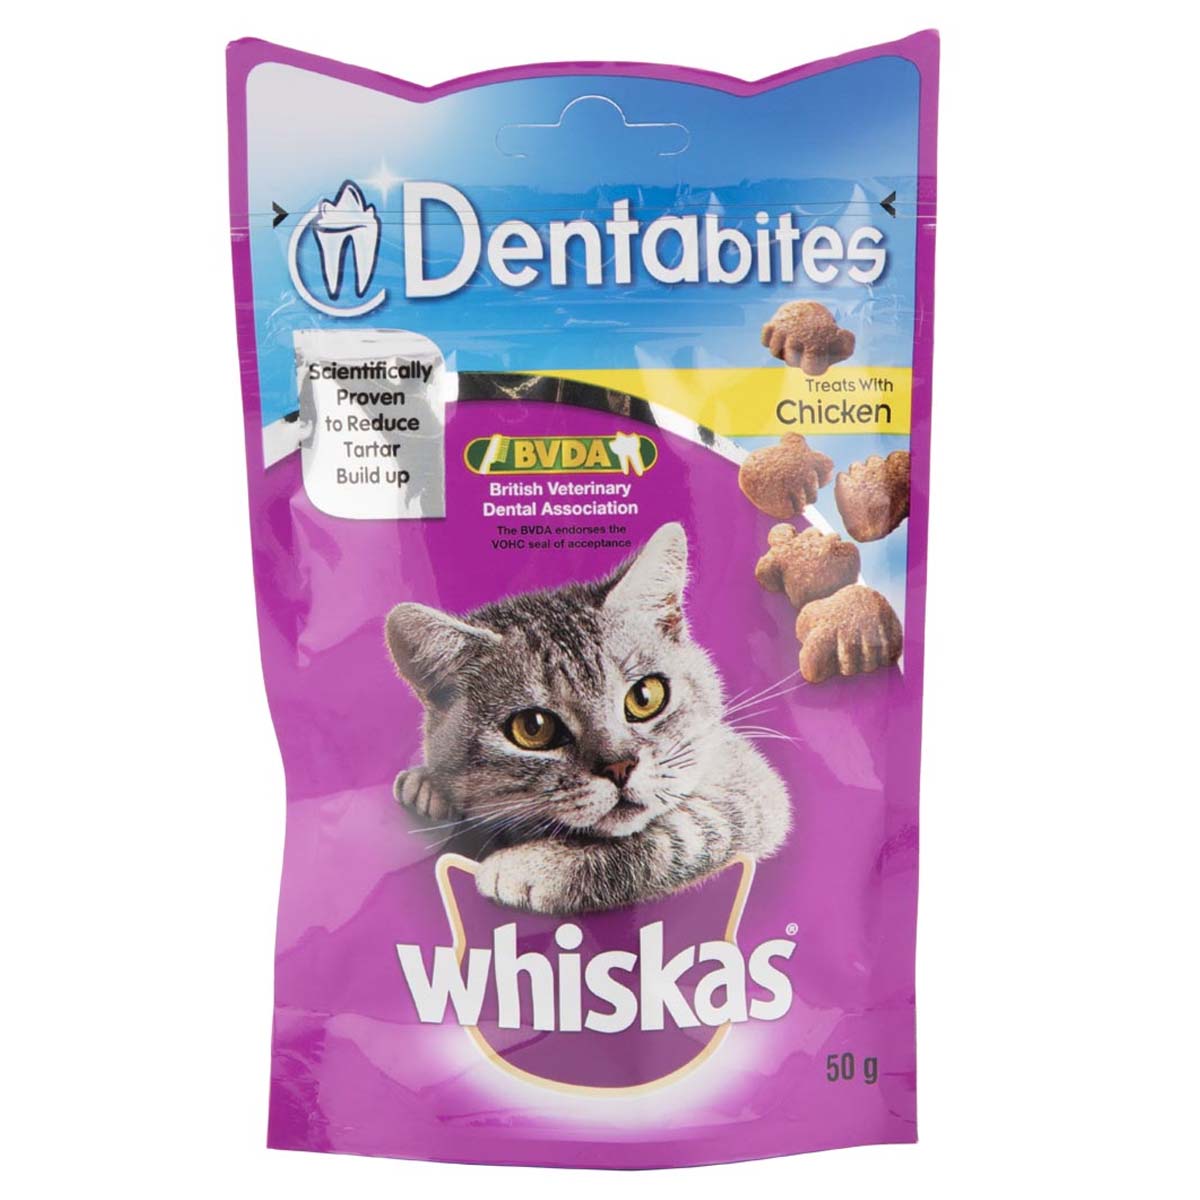 Whiskas - Dentabites Treats with Chicken - 50g - Continental Food Store